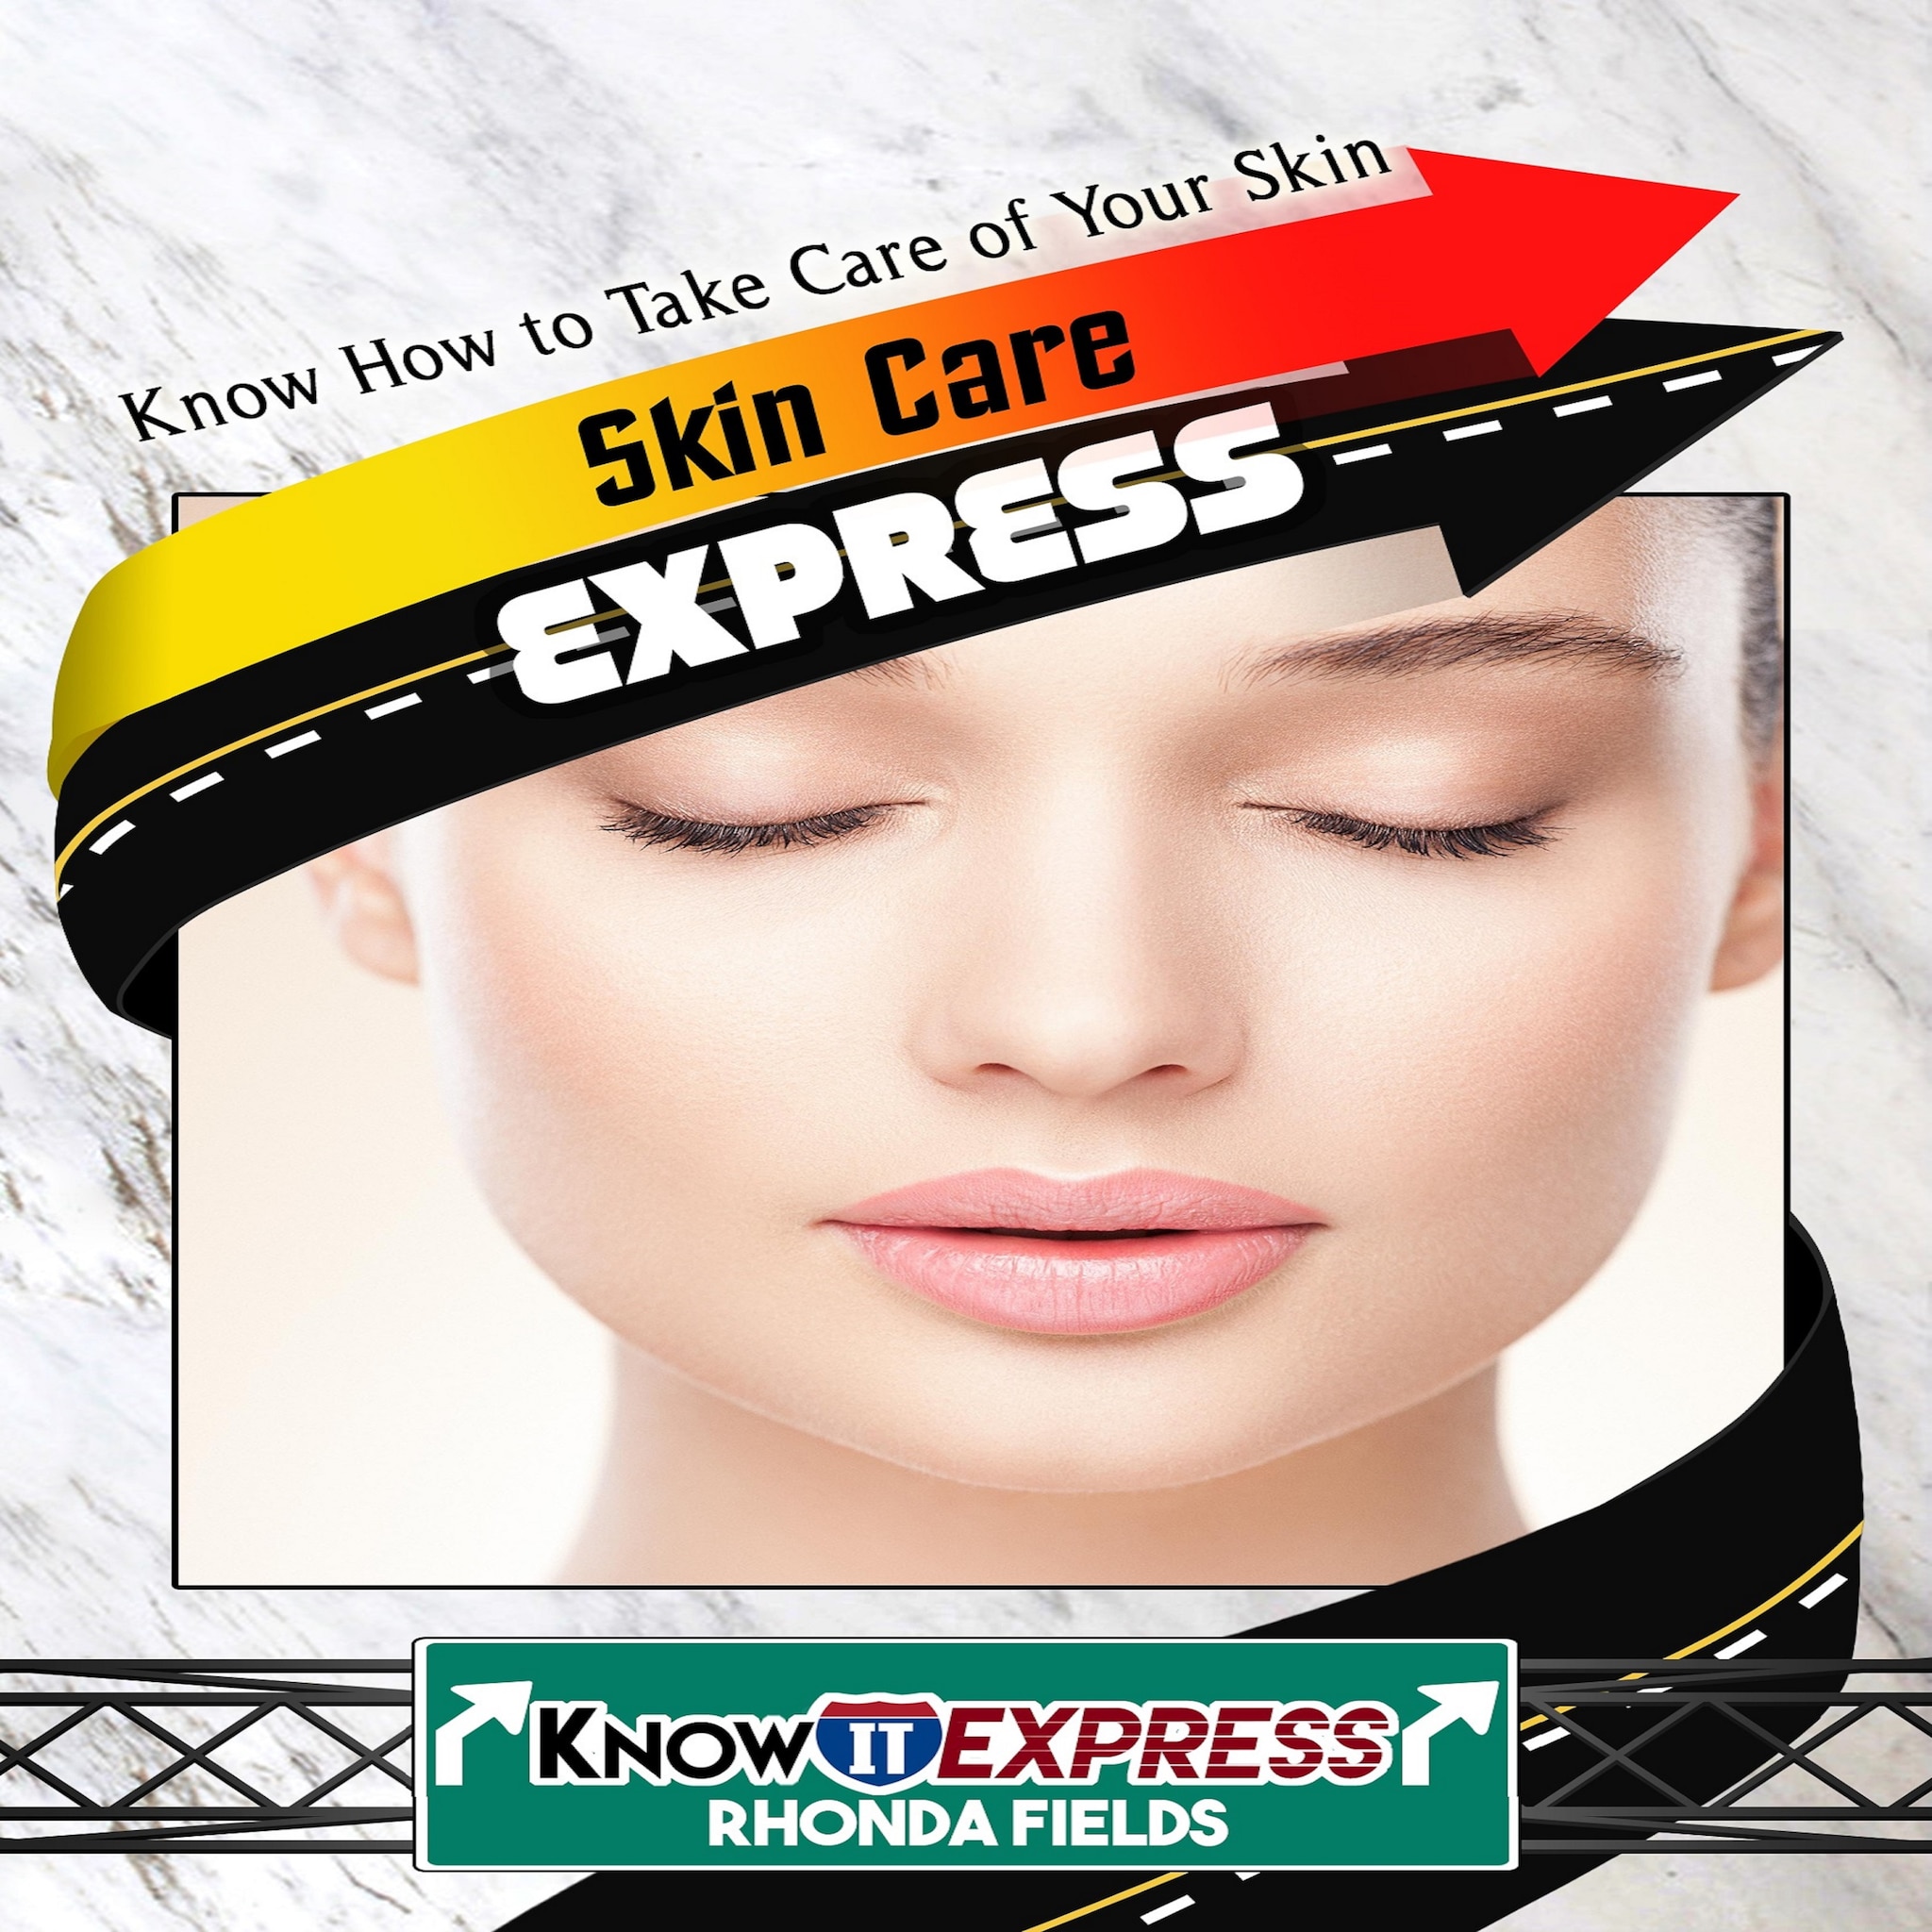 Skin Care Express ilmaiseksi